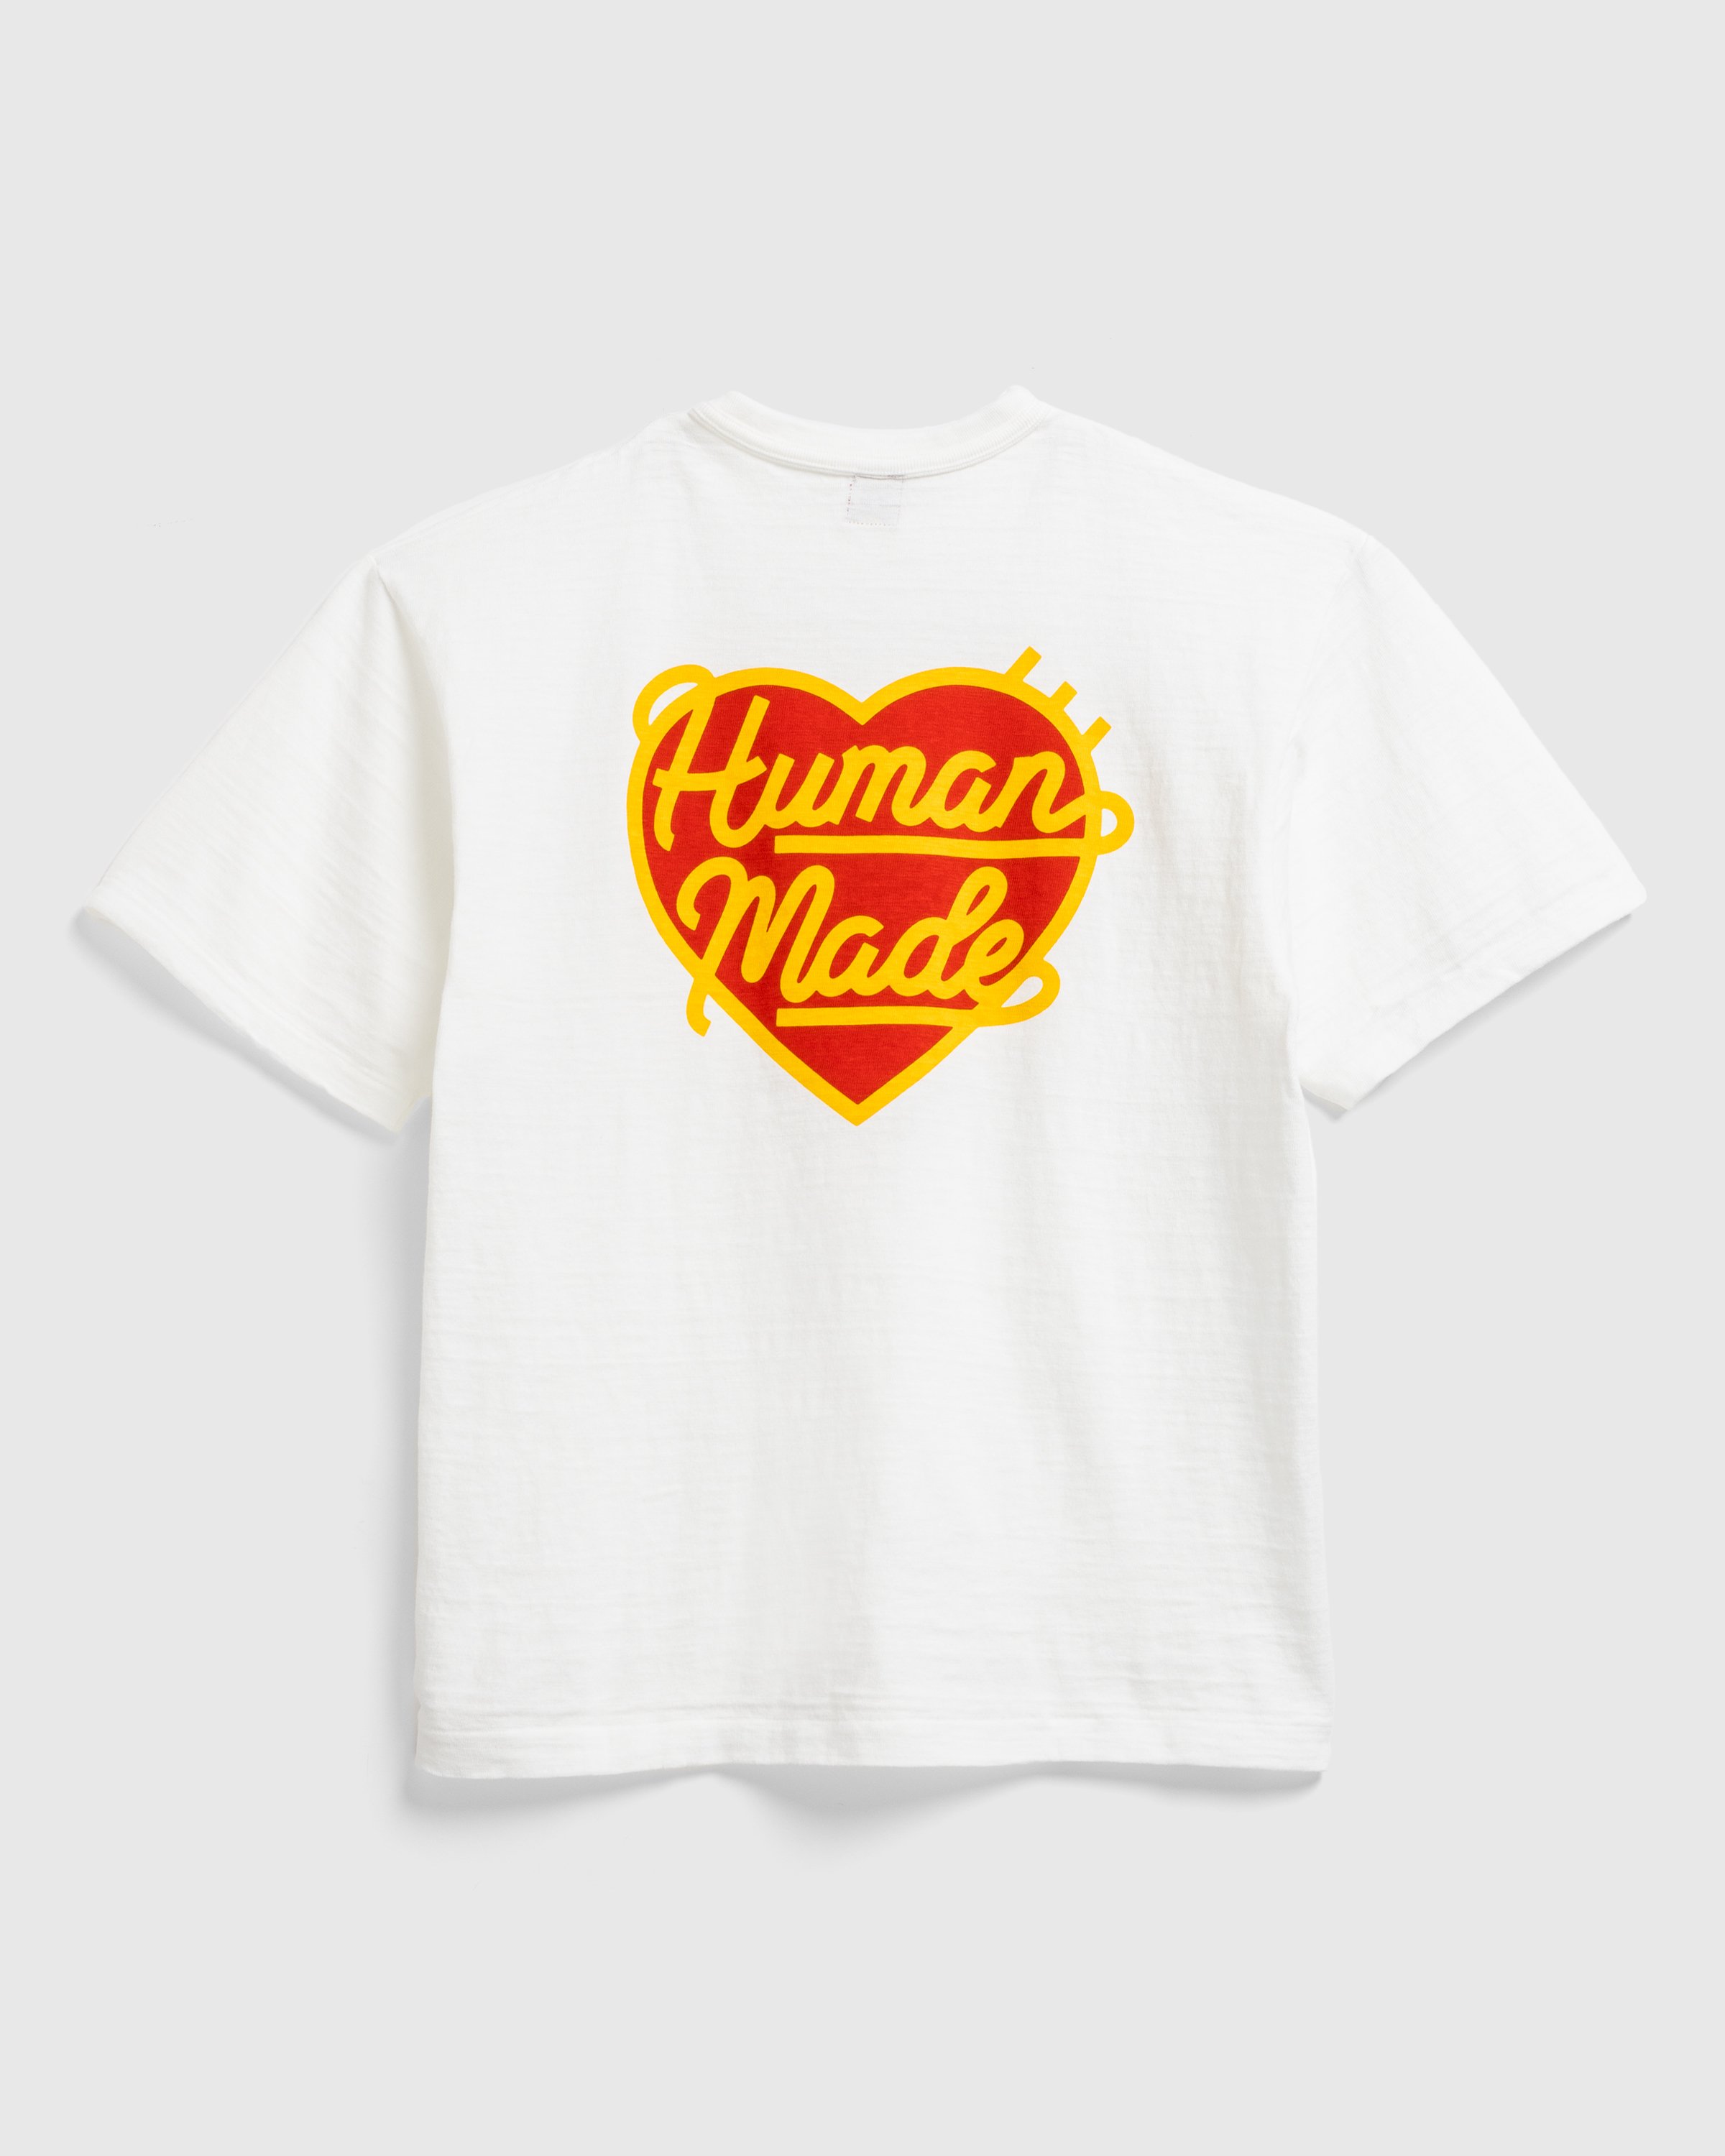 Human Made - HEART BADGE T-SHIRT WHITE/White - Clothing - White - Image 1